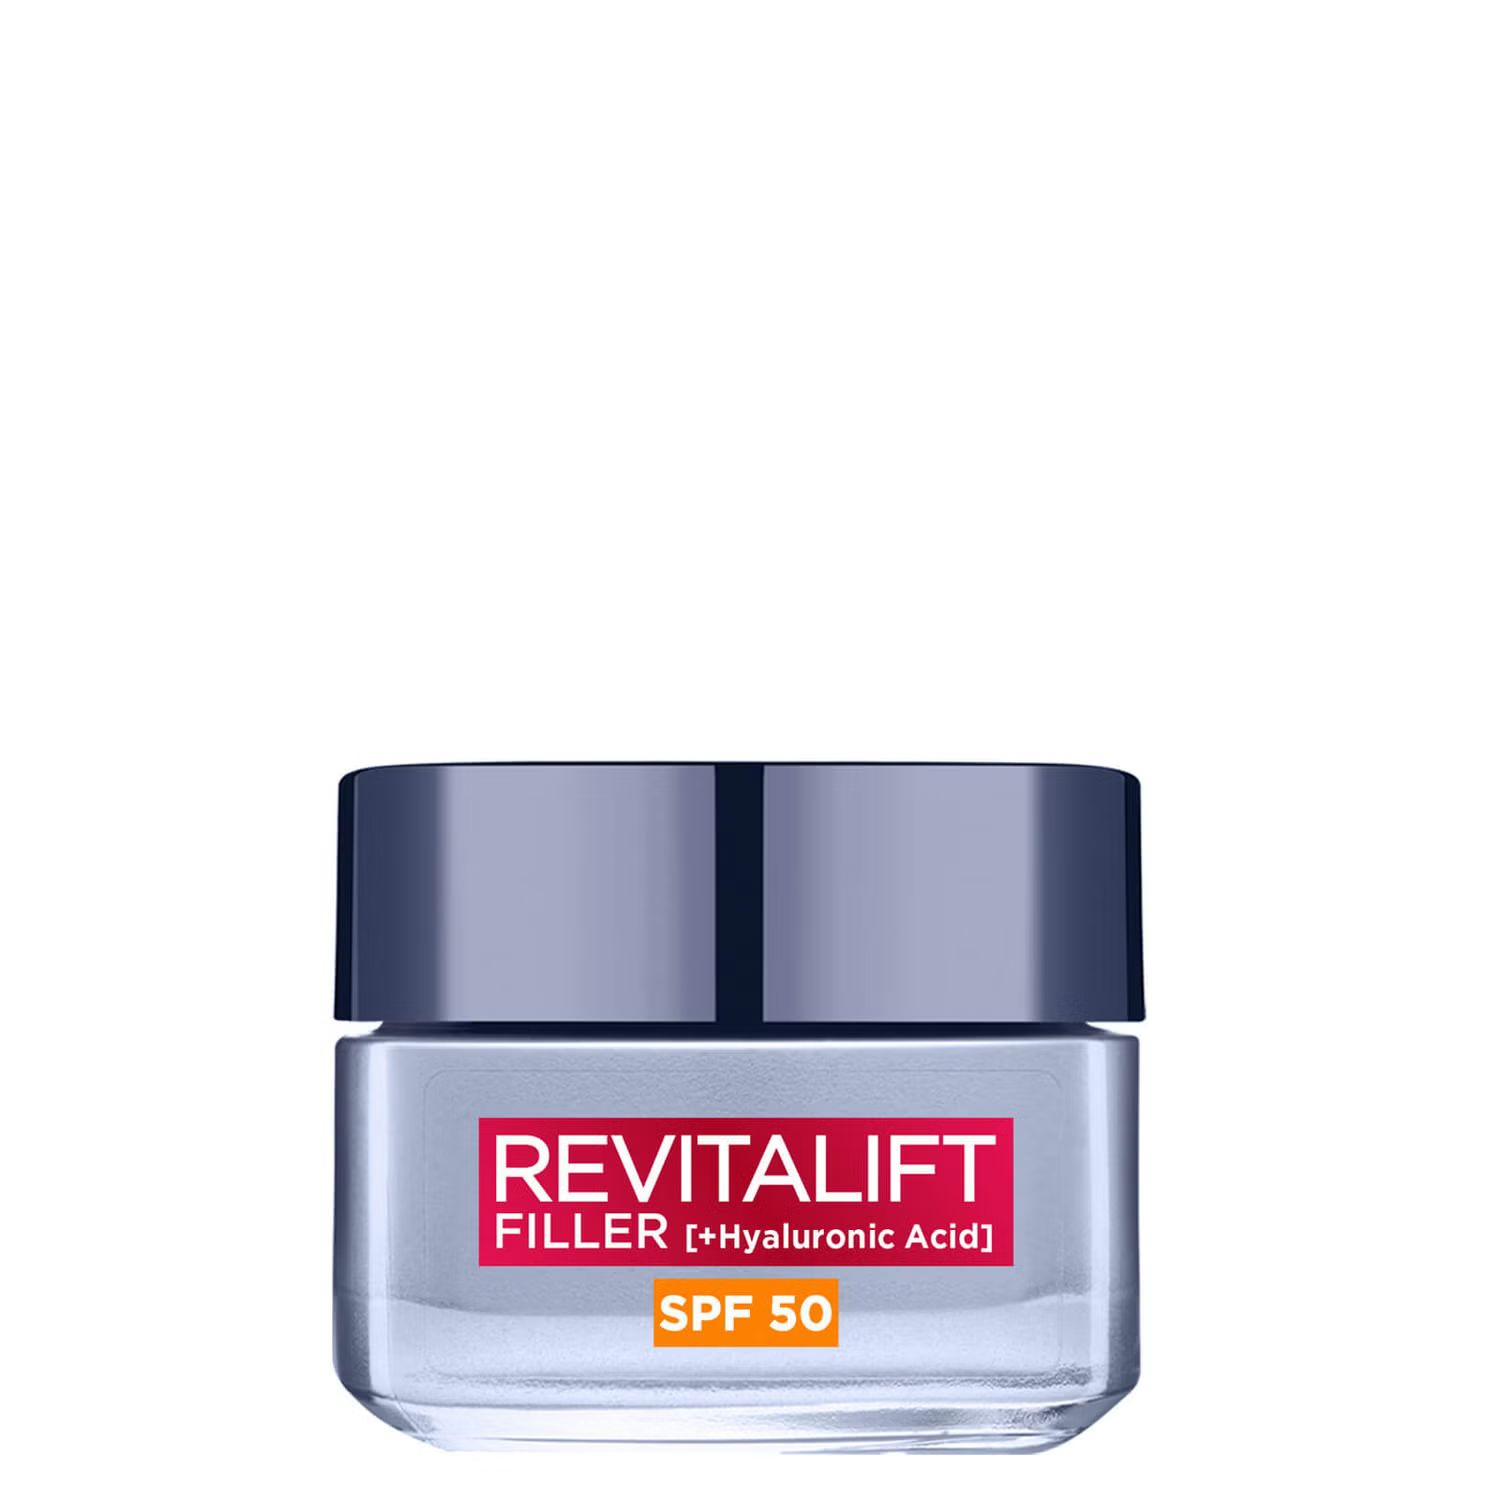 L'Oréal Paris Revitalift Filler Hyaluronic Acid Anti-Ageing SPF50 Day Cream 50ml | Look Fantastic (UK)